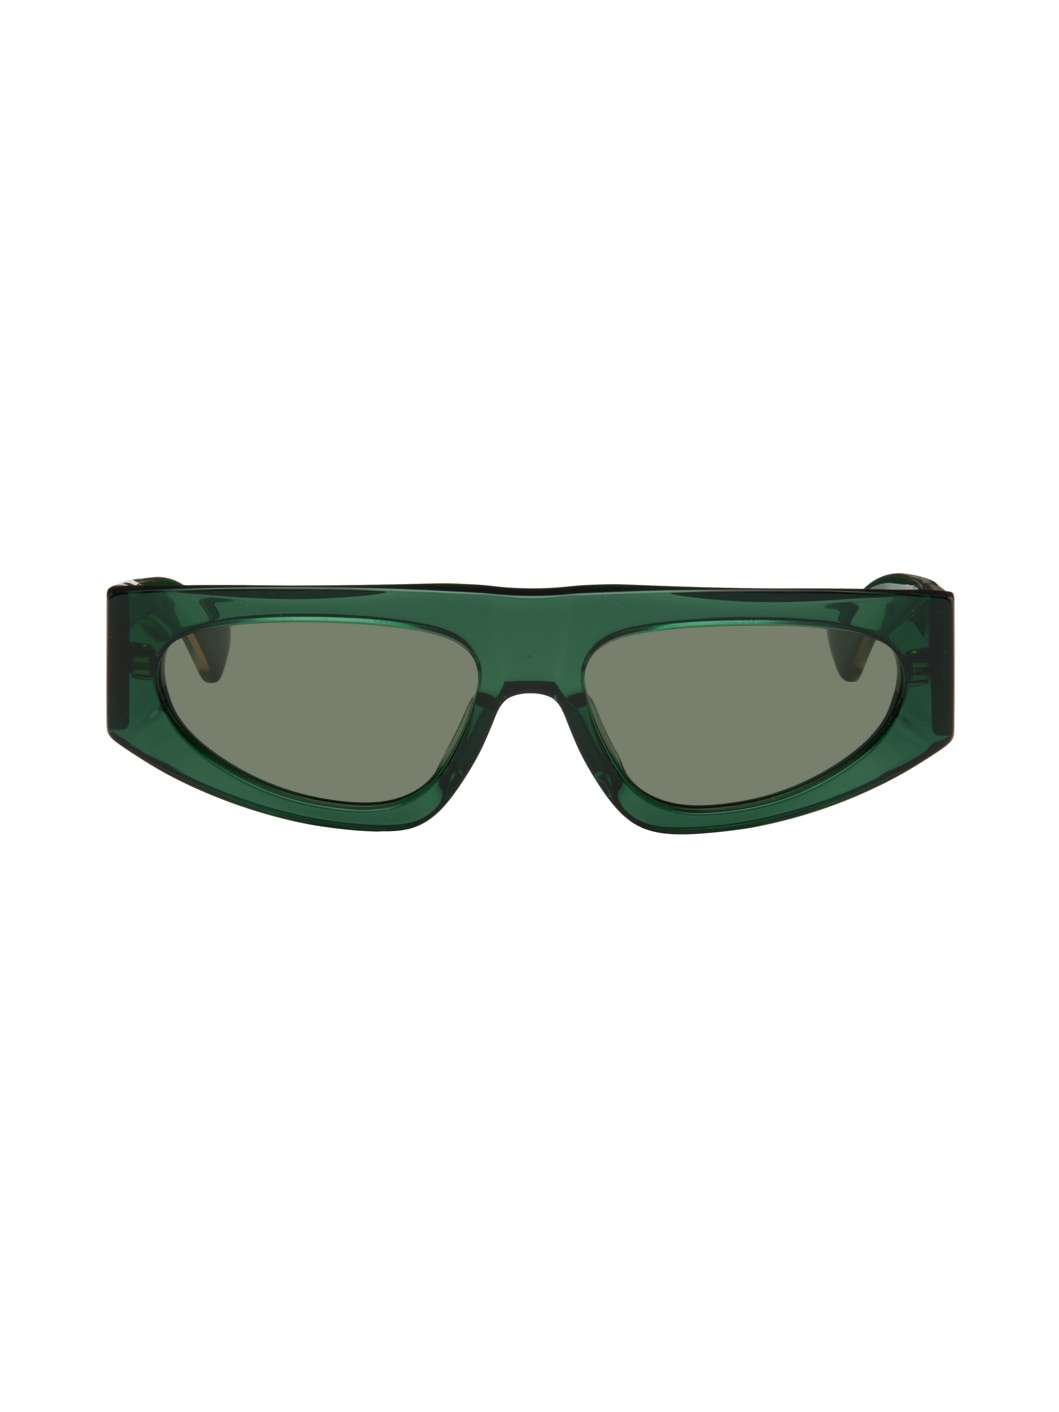 Green Rectangular Sunglasses - 1